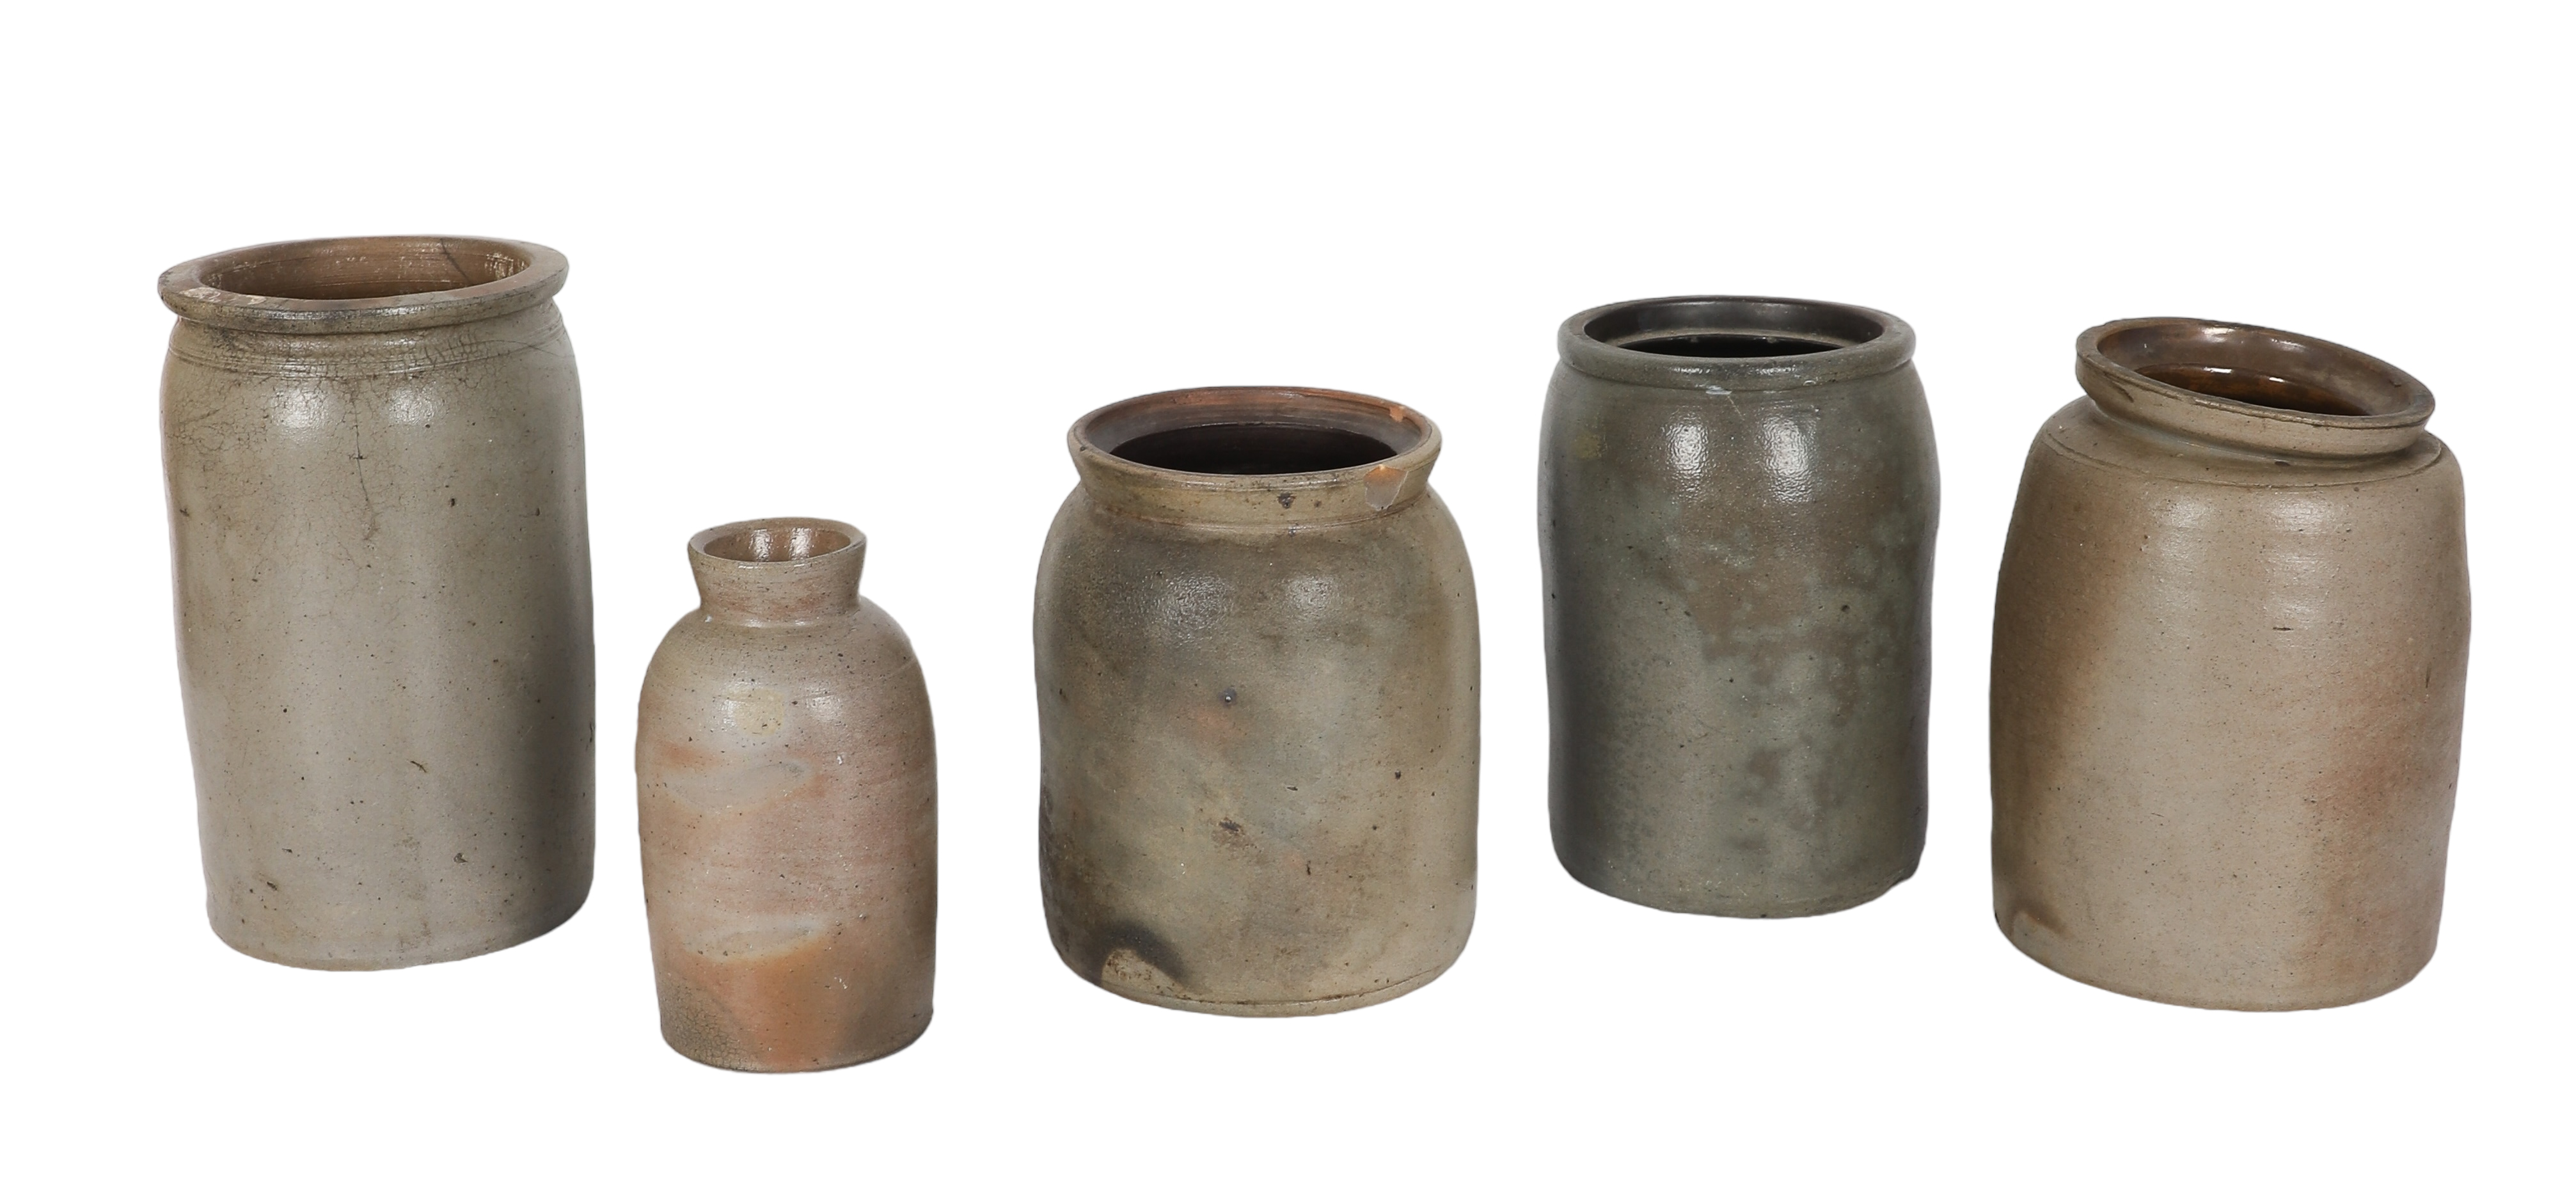 (5) Plain stoneware jars, tallest